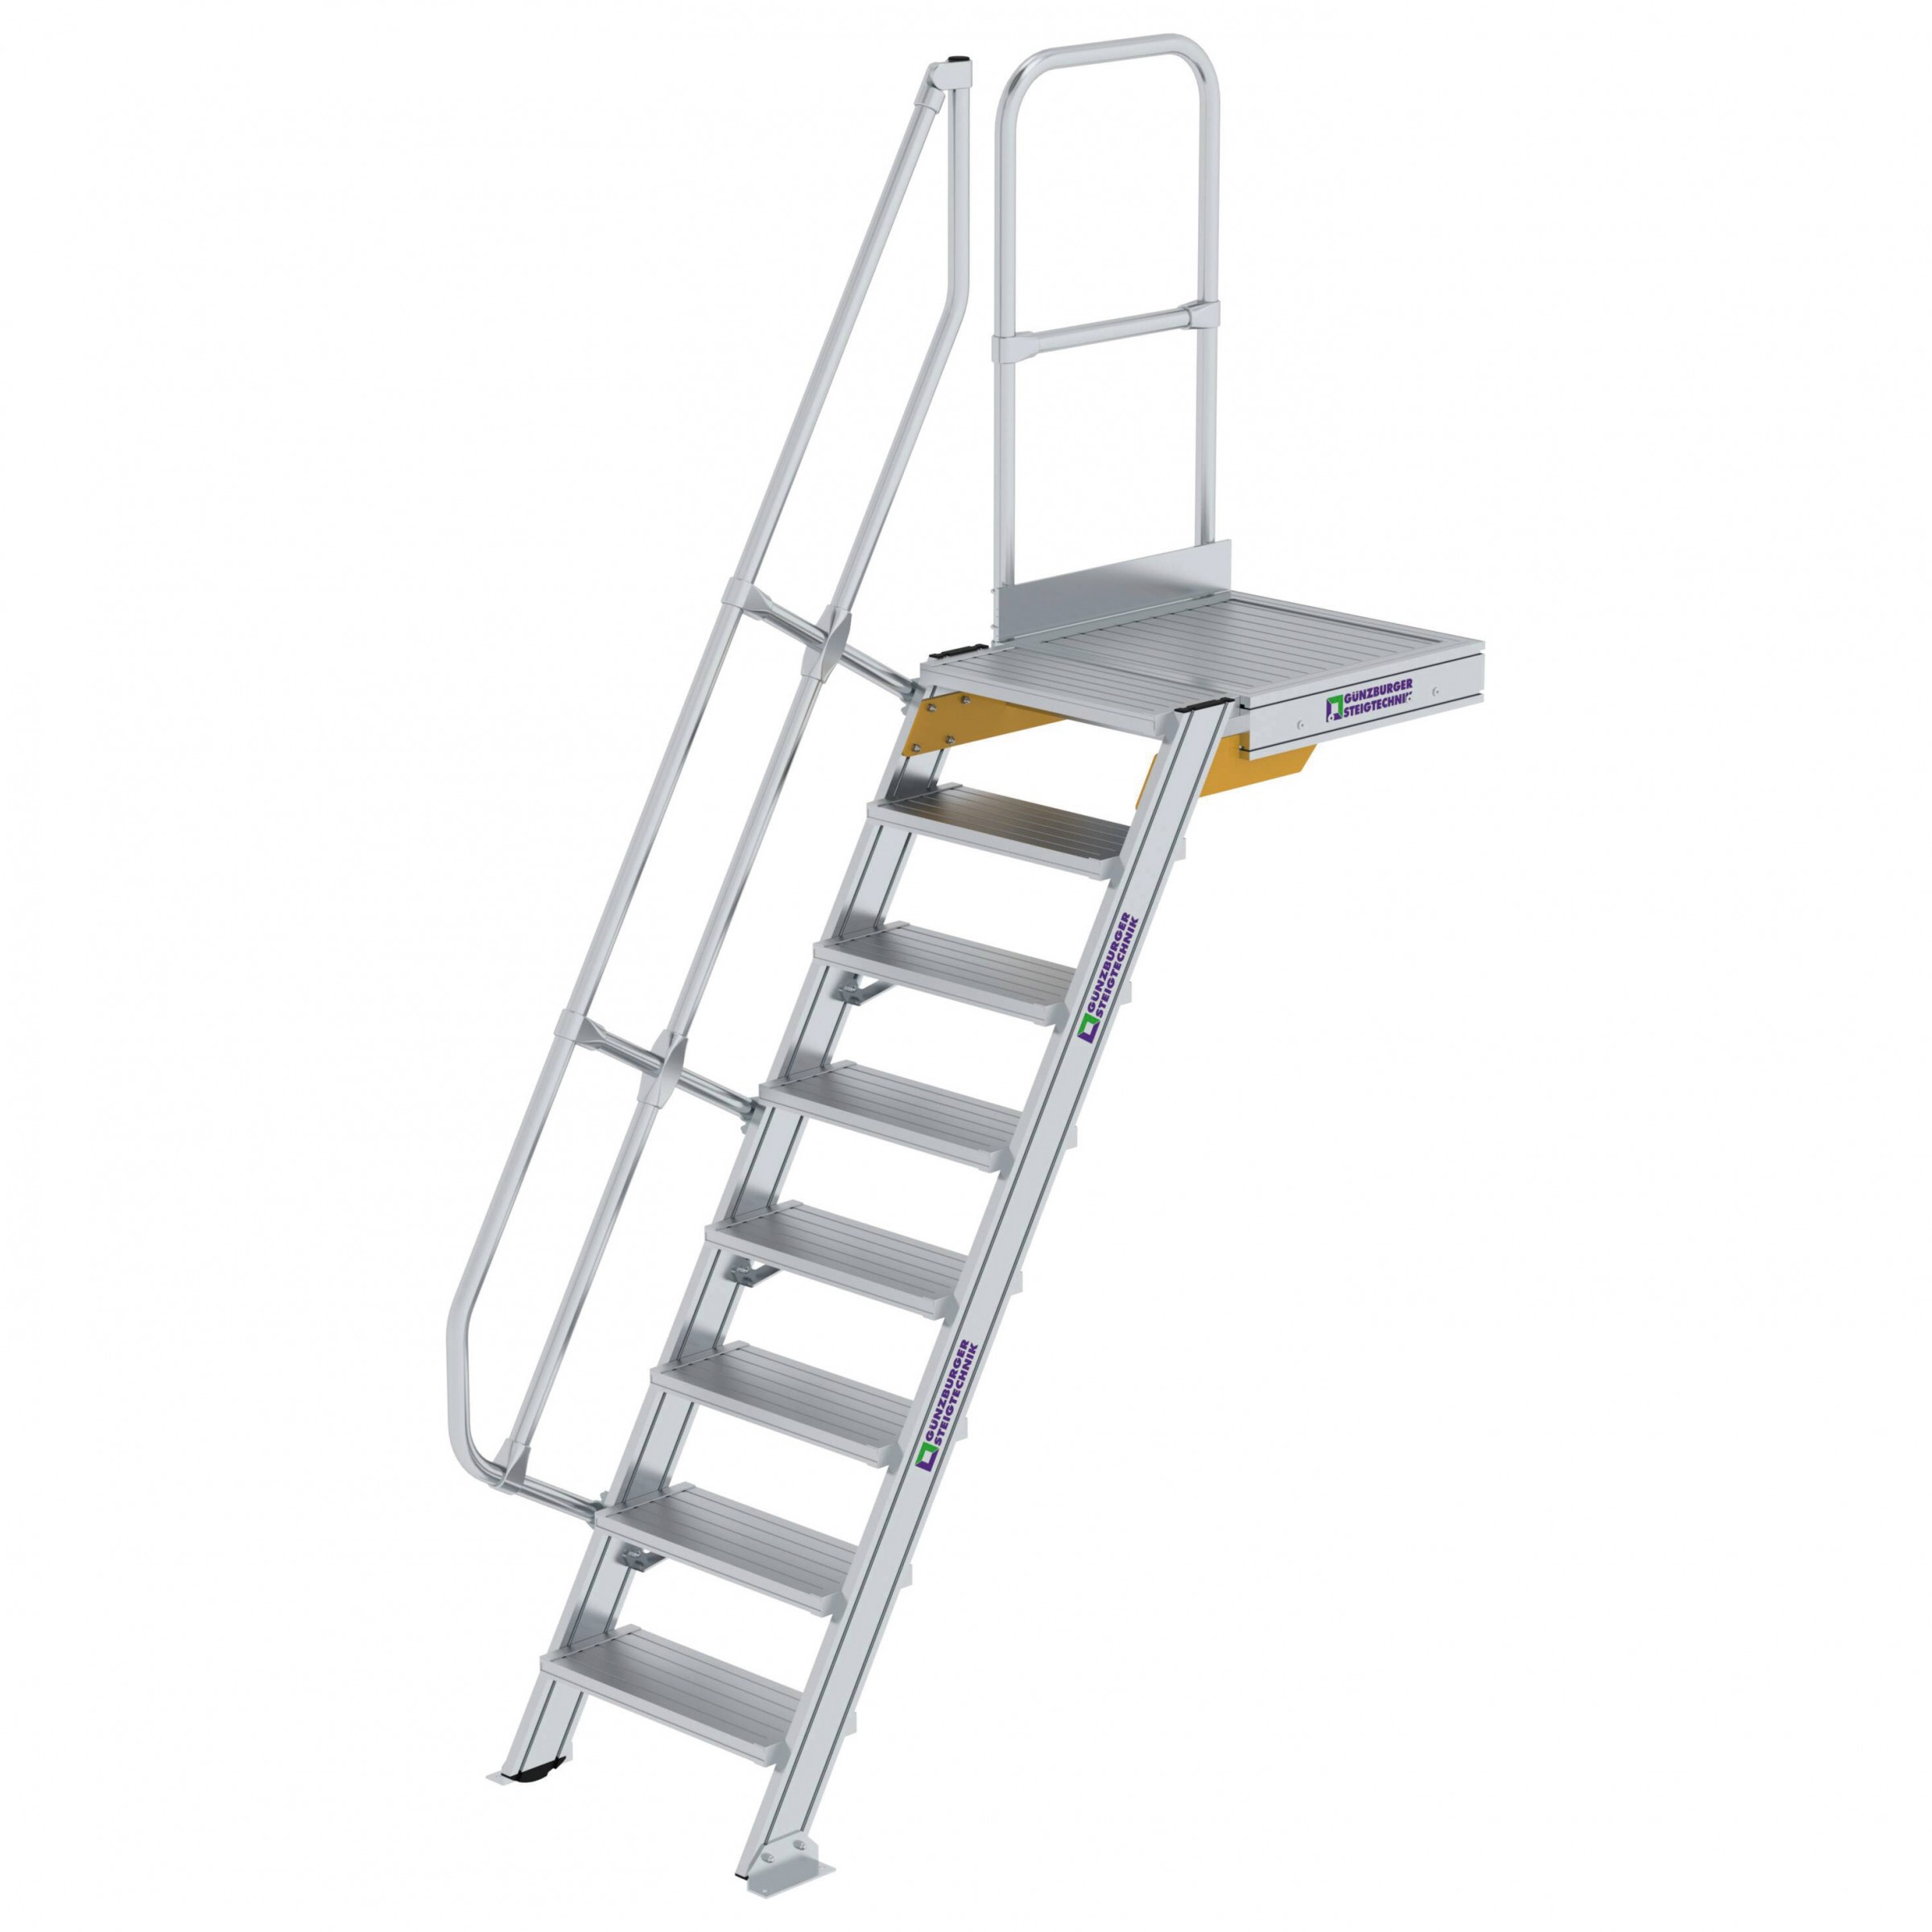 Aluminium-Treppe 60° mit Podest, Stufenbreite 600 mm, 4 Stufen